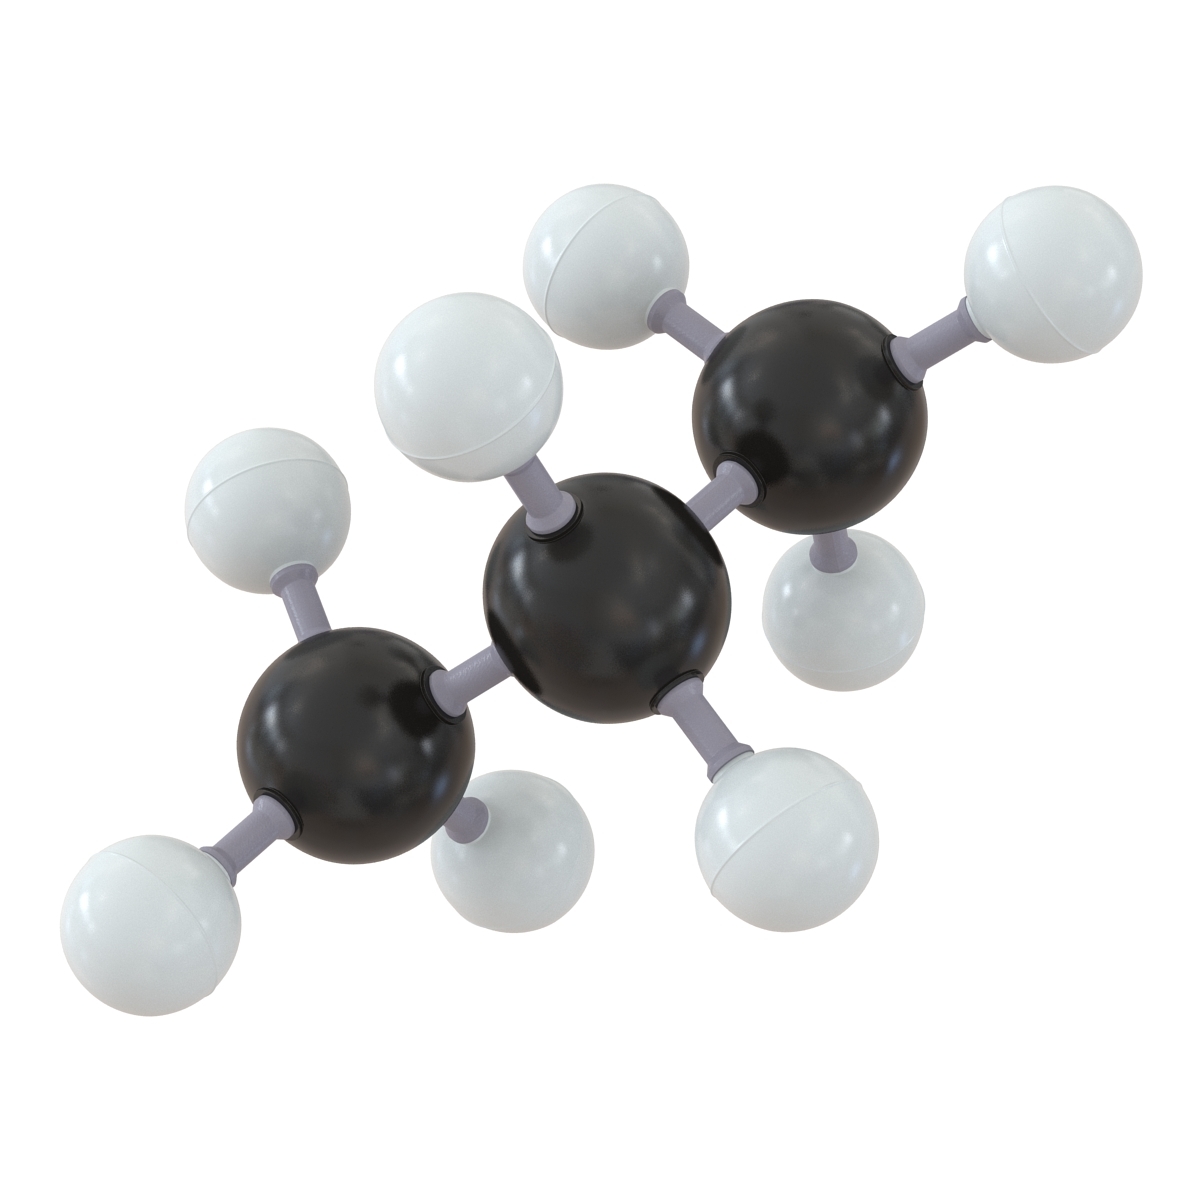 3d model of propane molecule